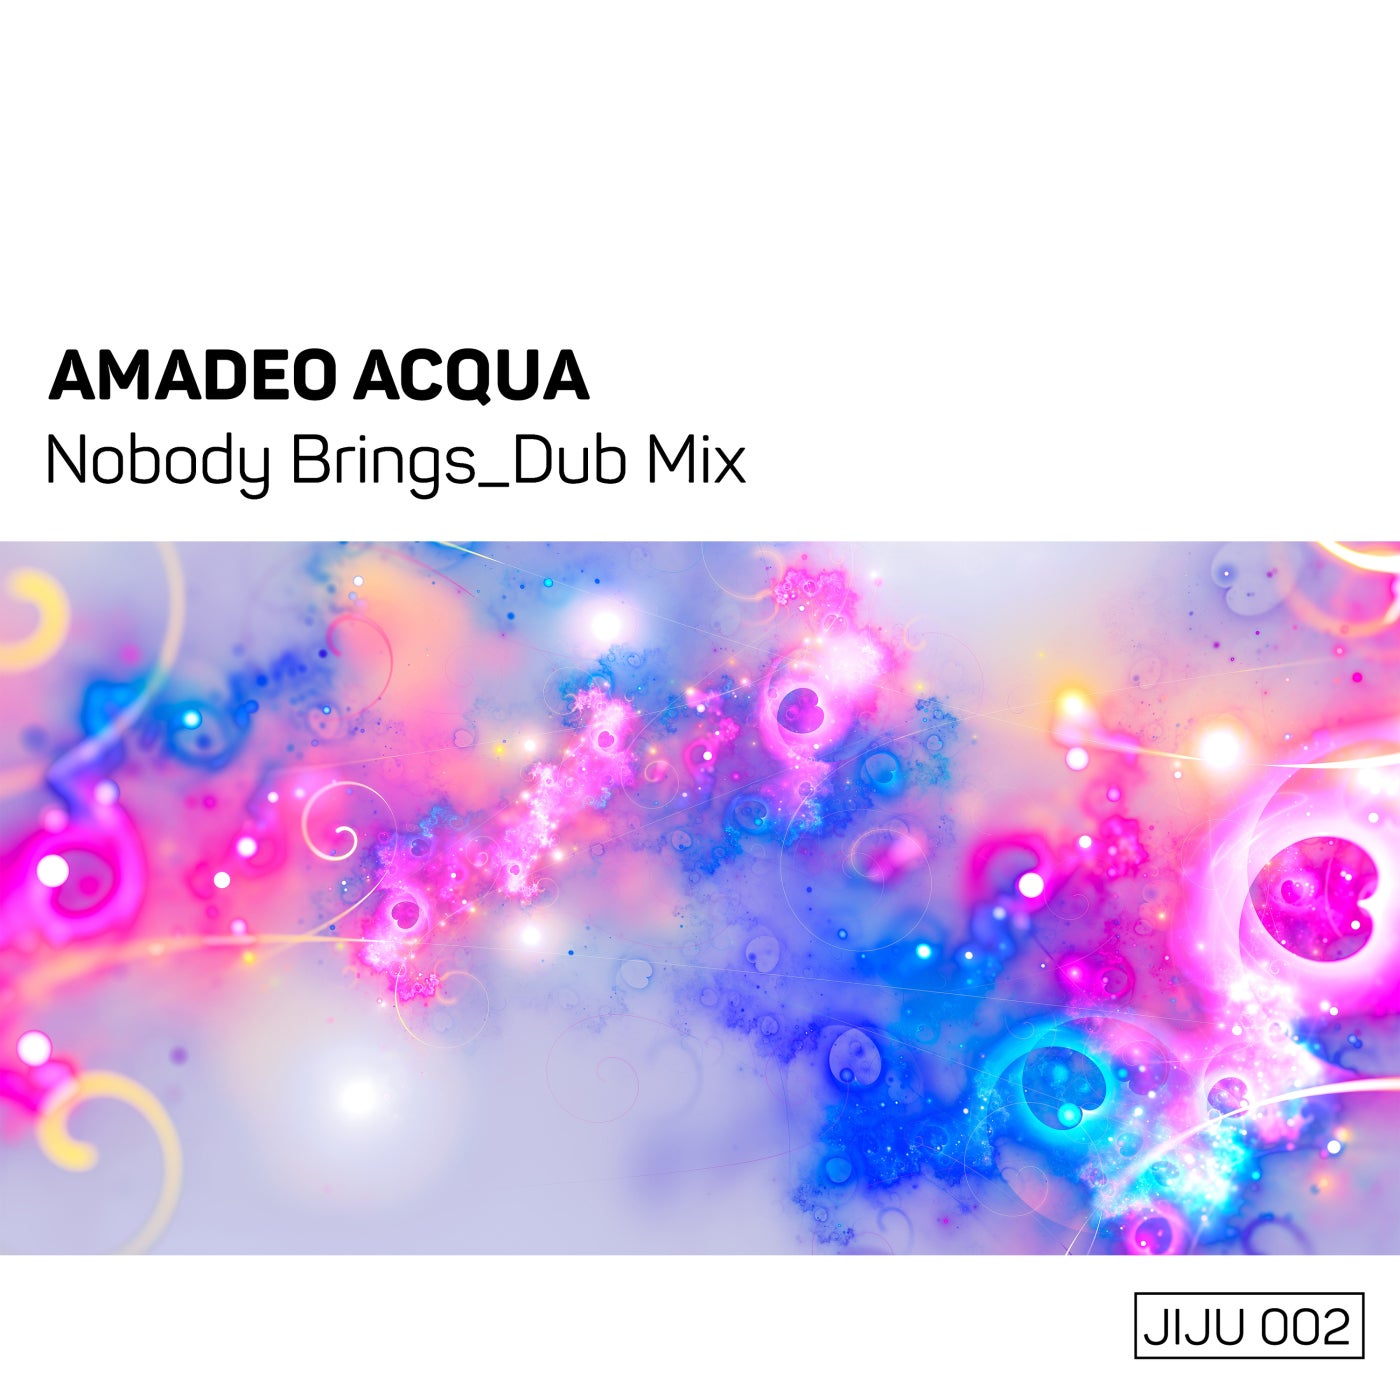 Amadeo Acqua - Nobody Brings (Dub Mix)